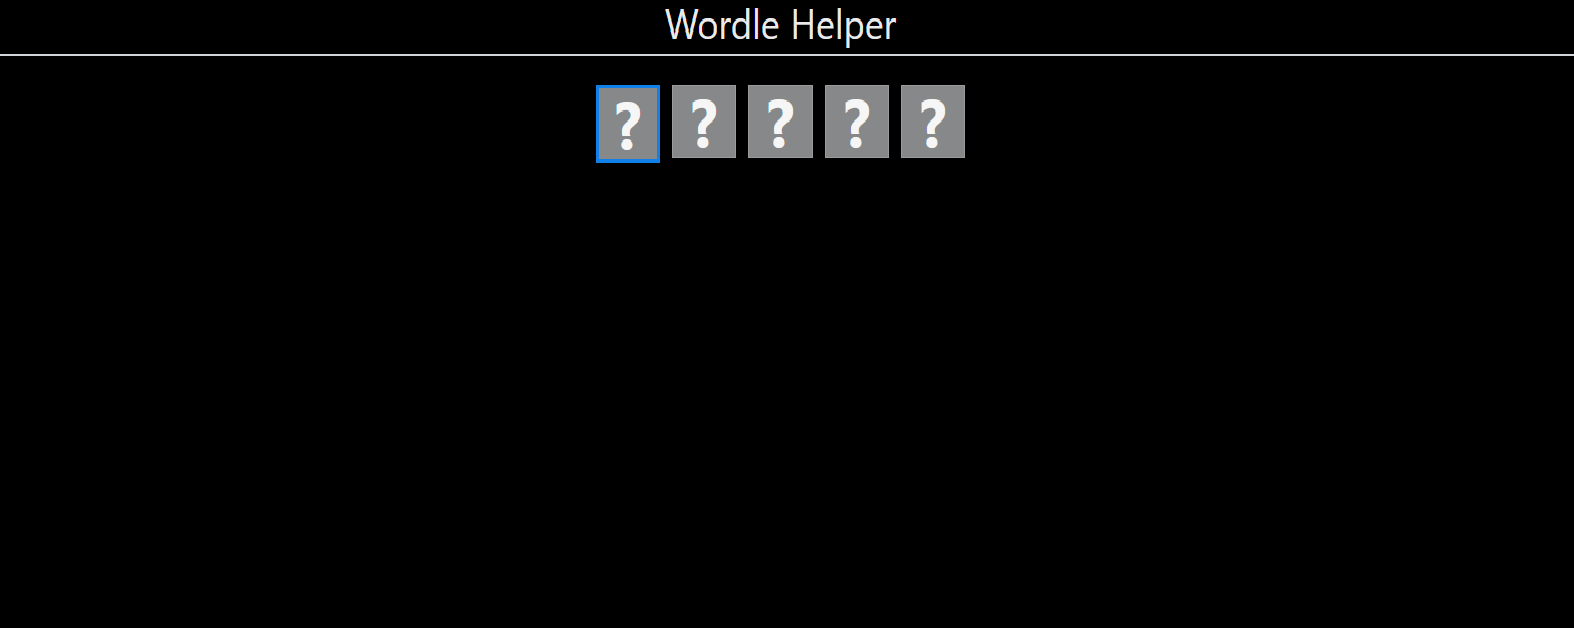 wordle helper screenshot